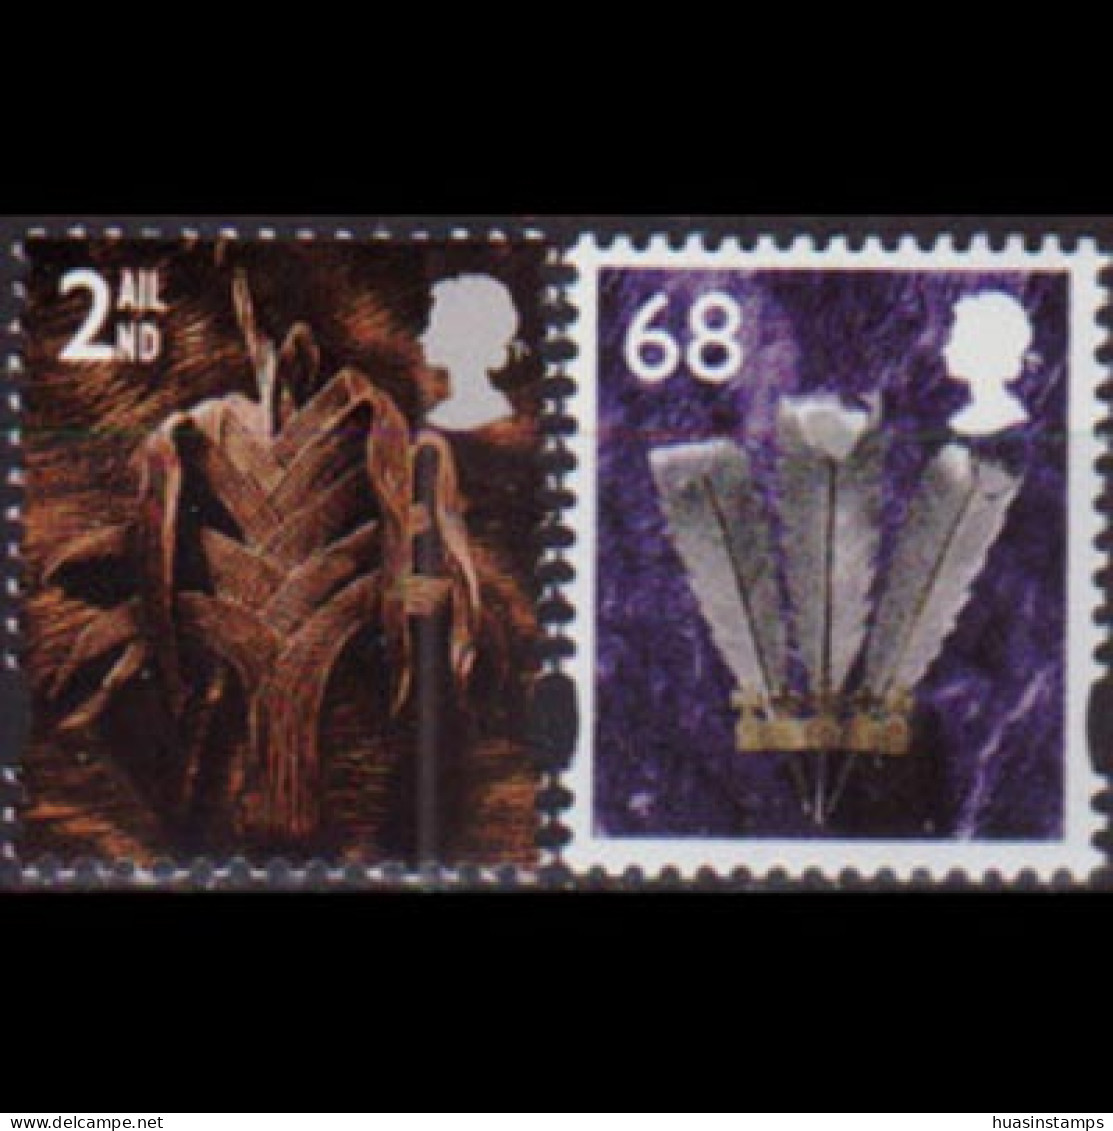 GB REGION-WALES 2002 - Scott# 18-9 Leek/Feather 2nd-65p MNH - Wales